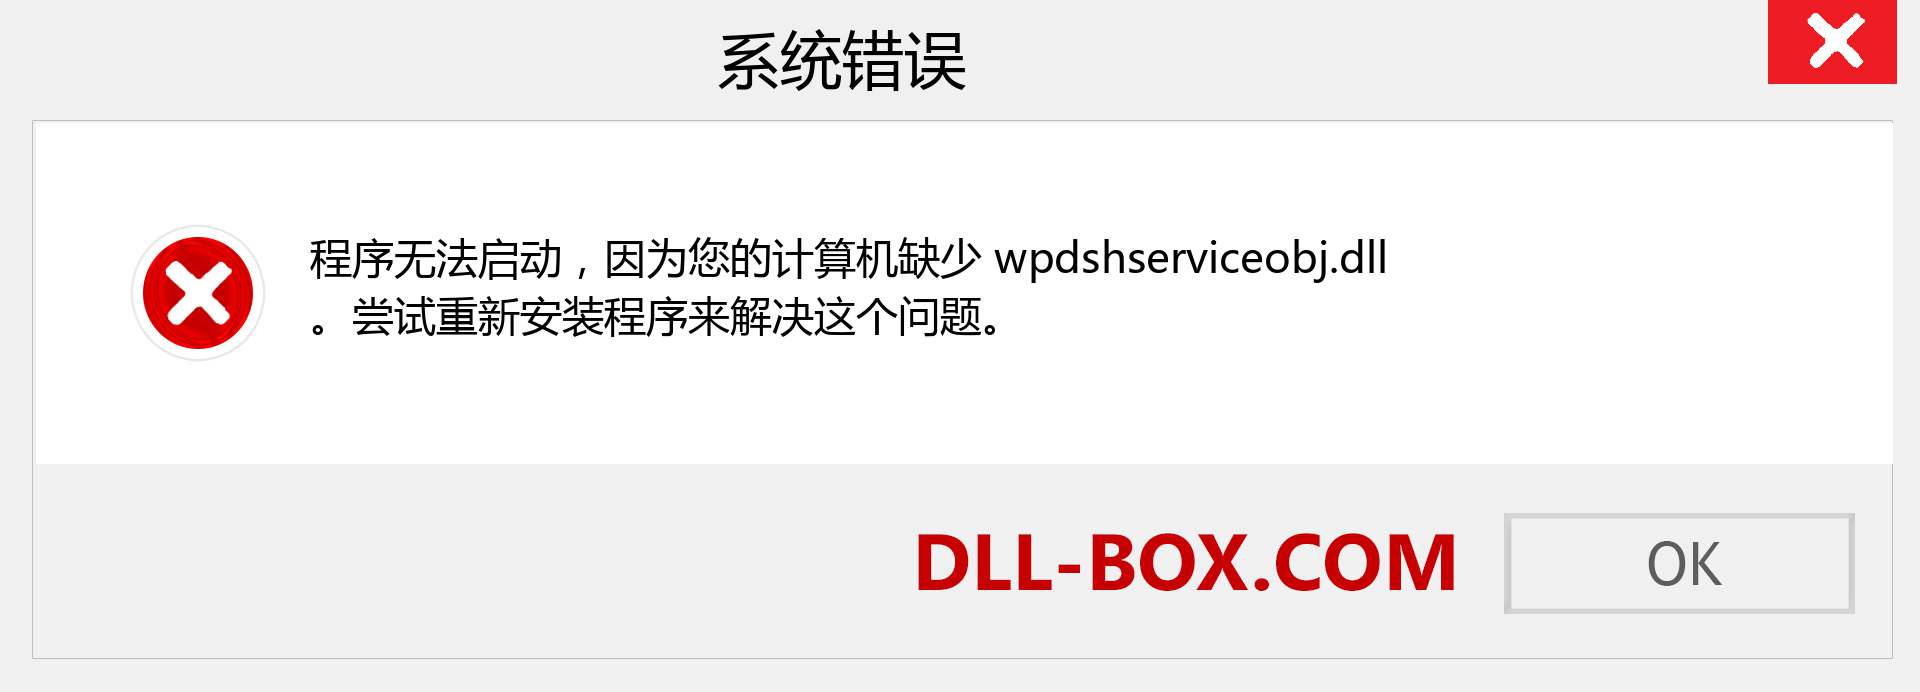 wpdshserviceobj.dll 文件丢失？。 适用于 Windows 7、8、10 的下载 - 修复 Windows、照片、图像上的 wpdshserviceobj dll 丢失错误